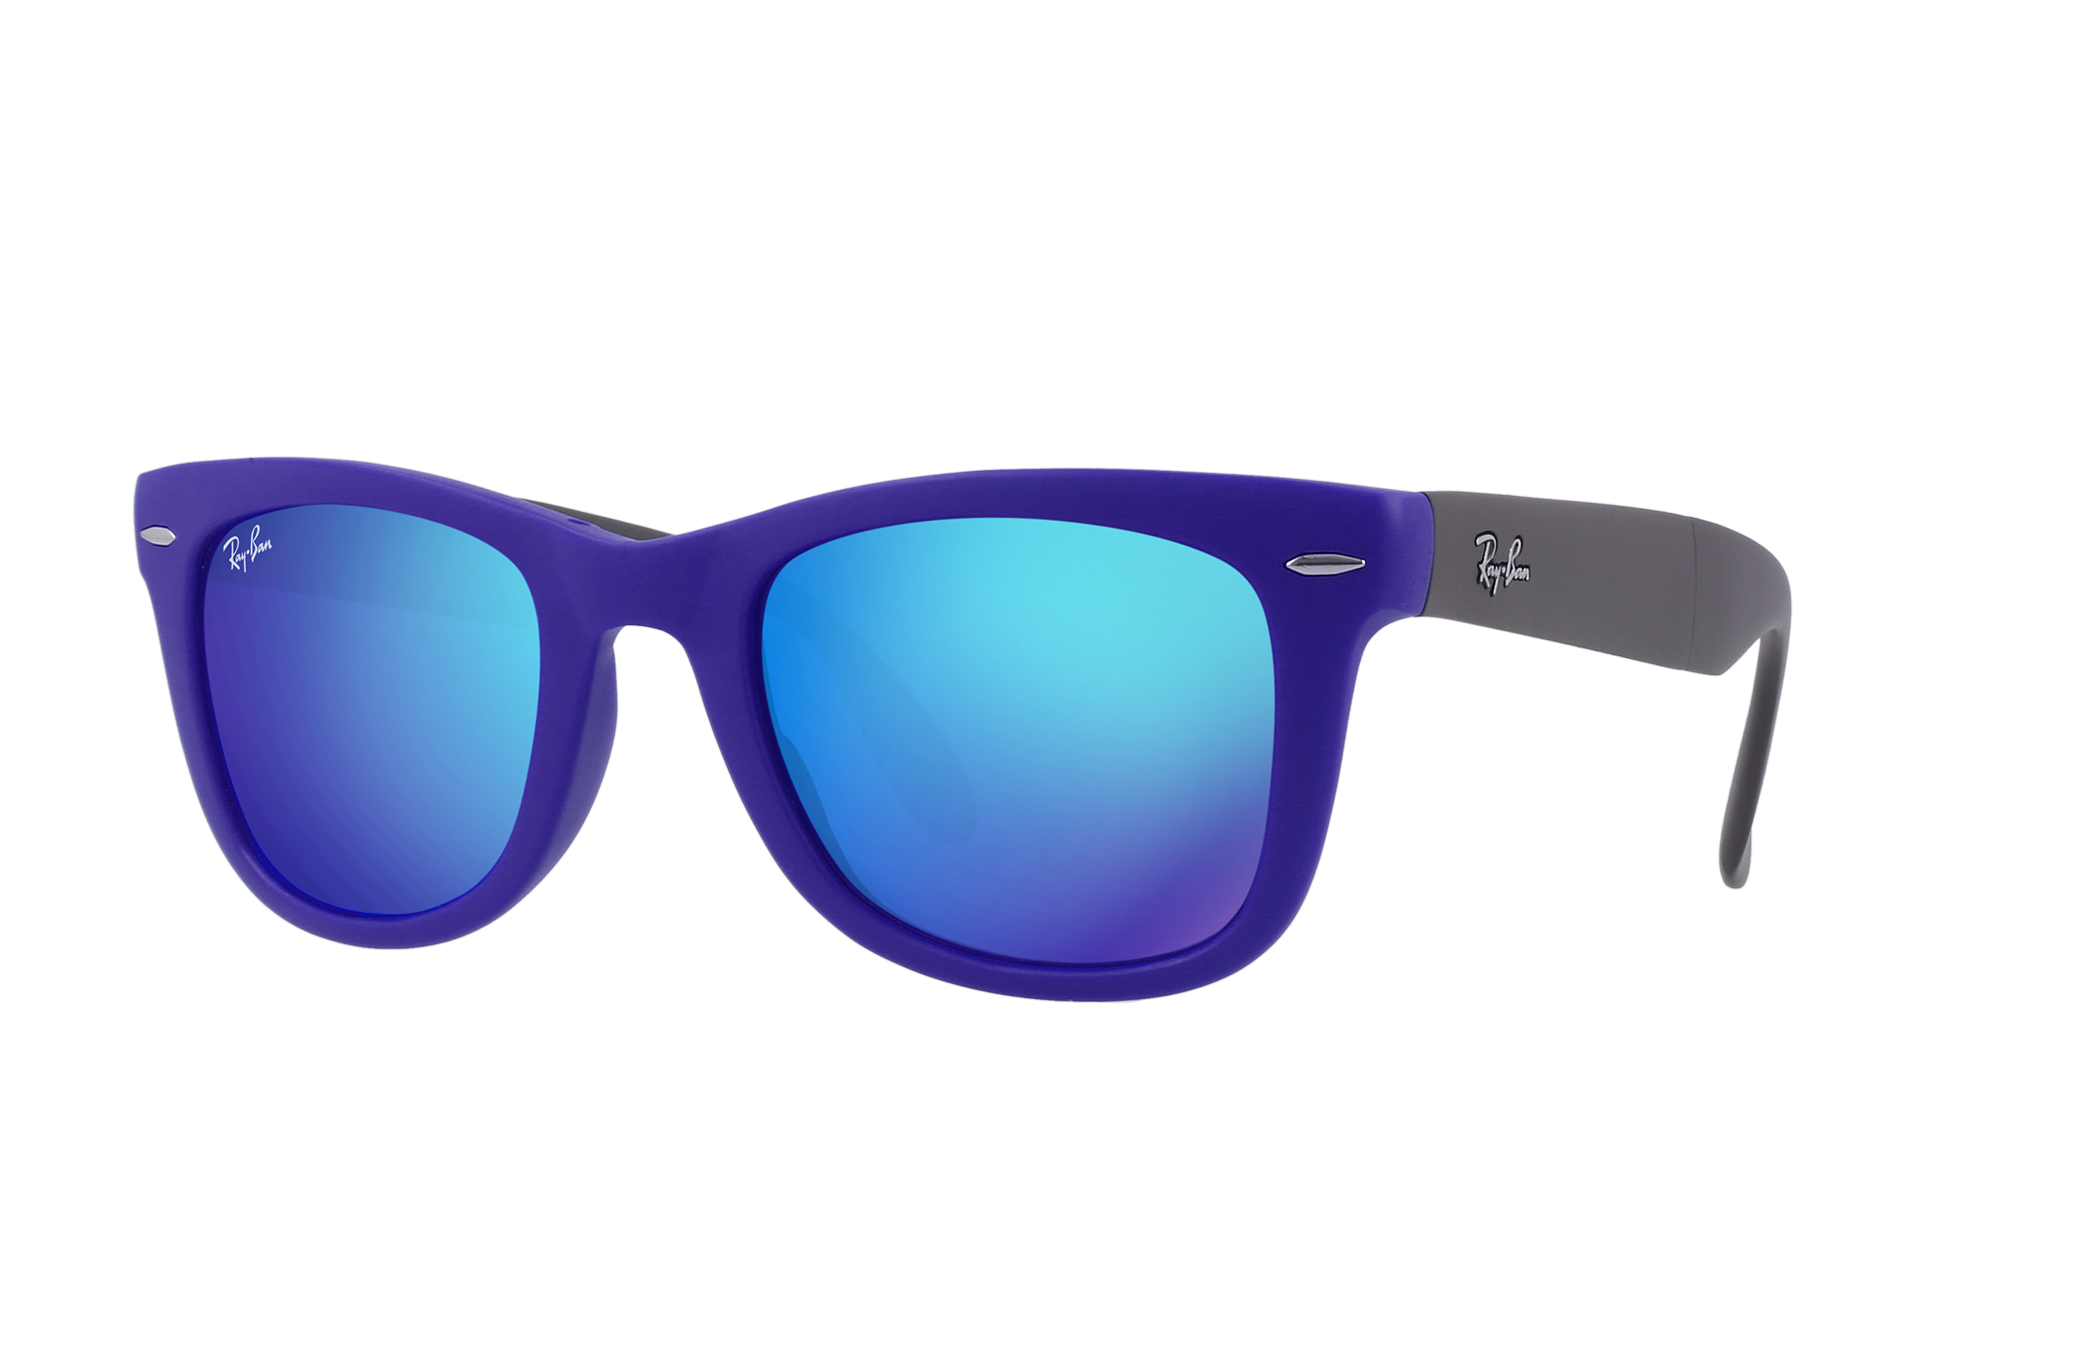 Wayfarer Folding Flash Lenses Sunglasses in Blue and Blue | Ray-Ban®